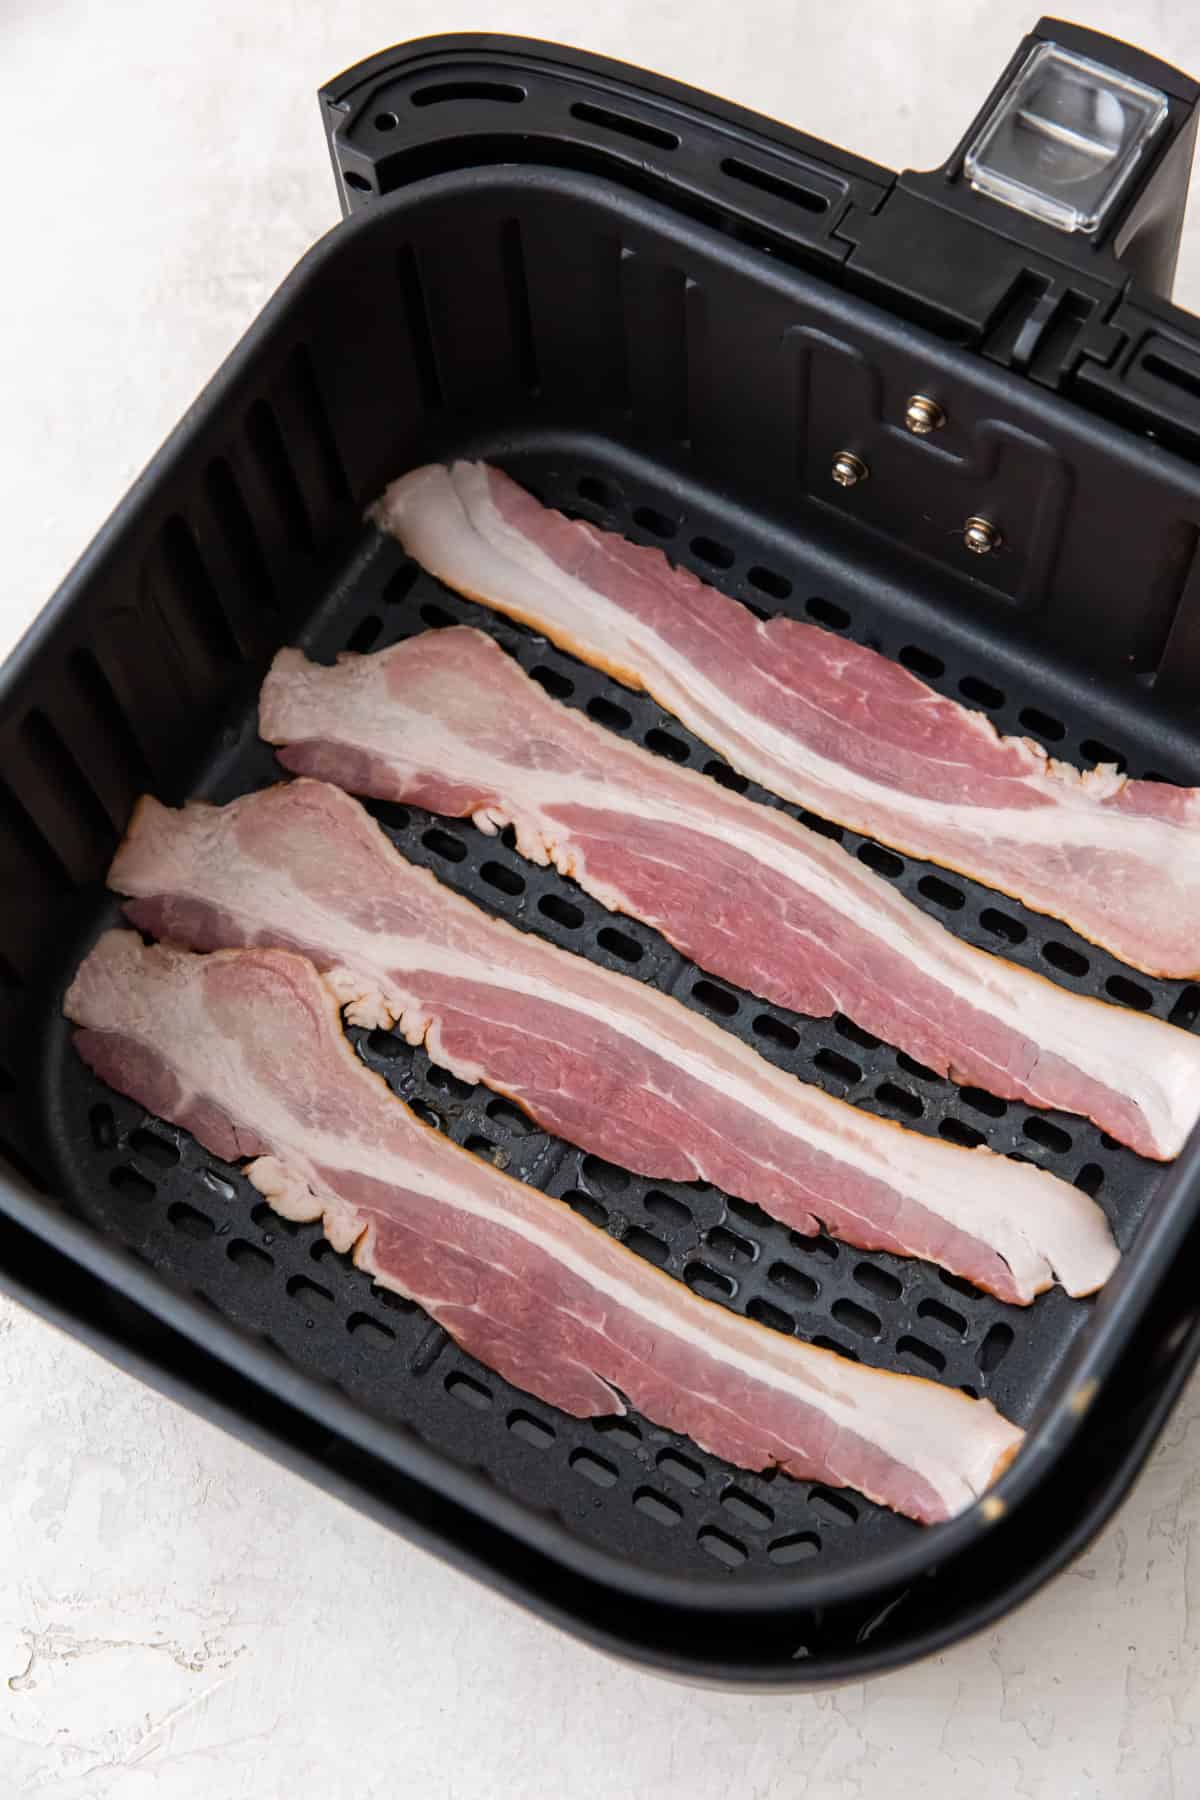 raw bacon in an air fryer basket.